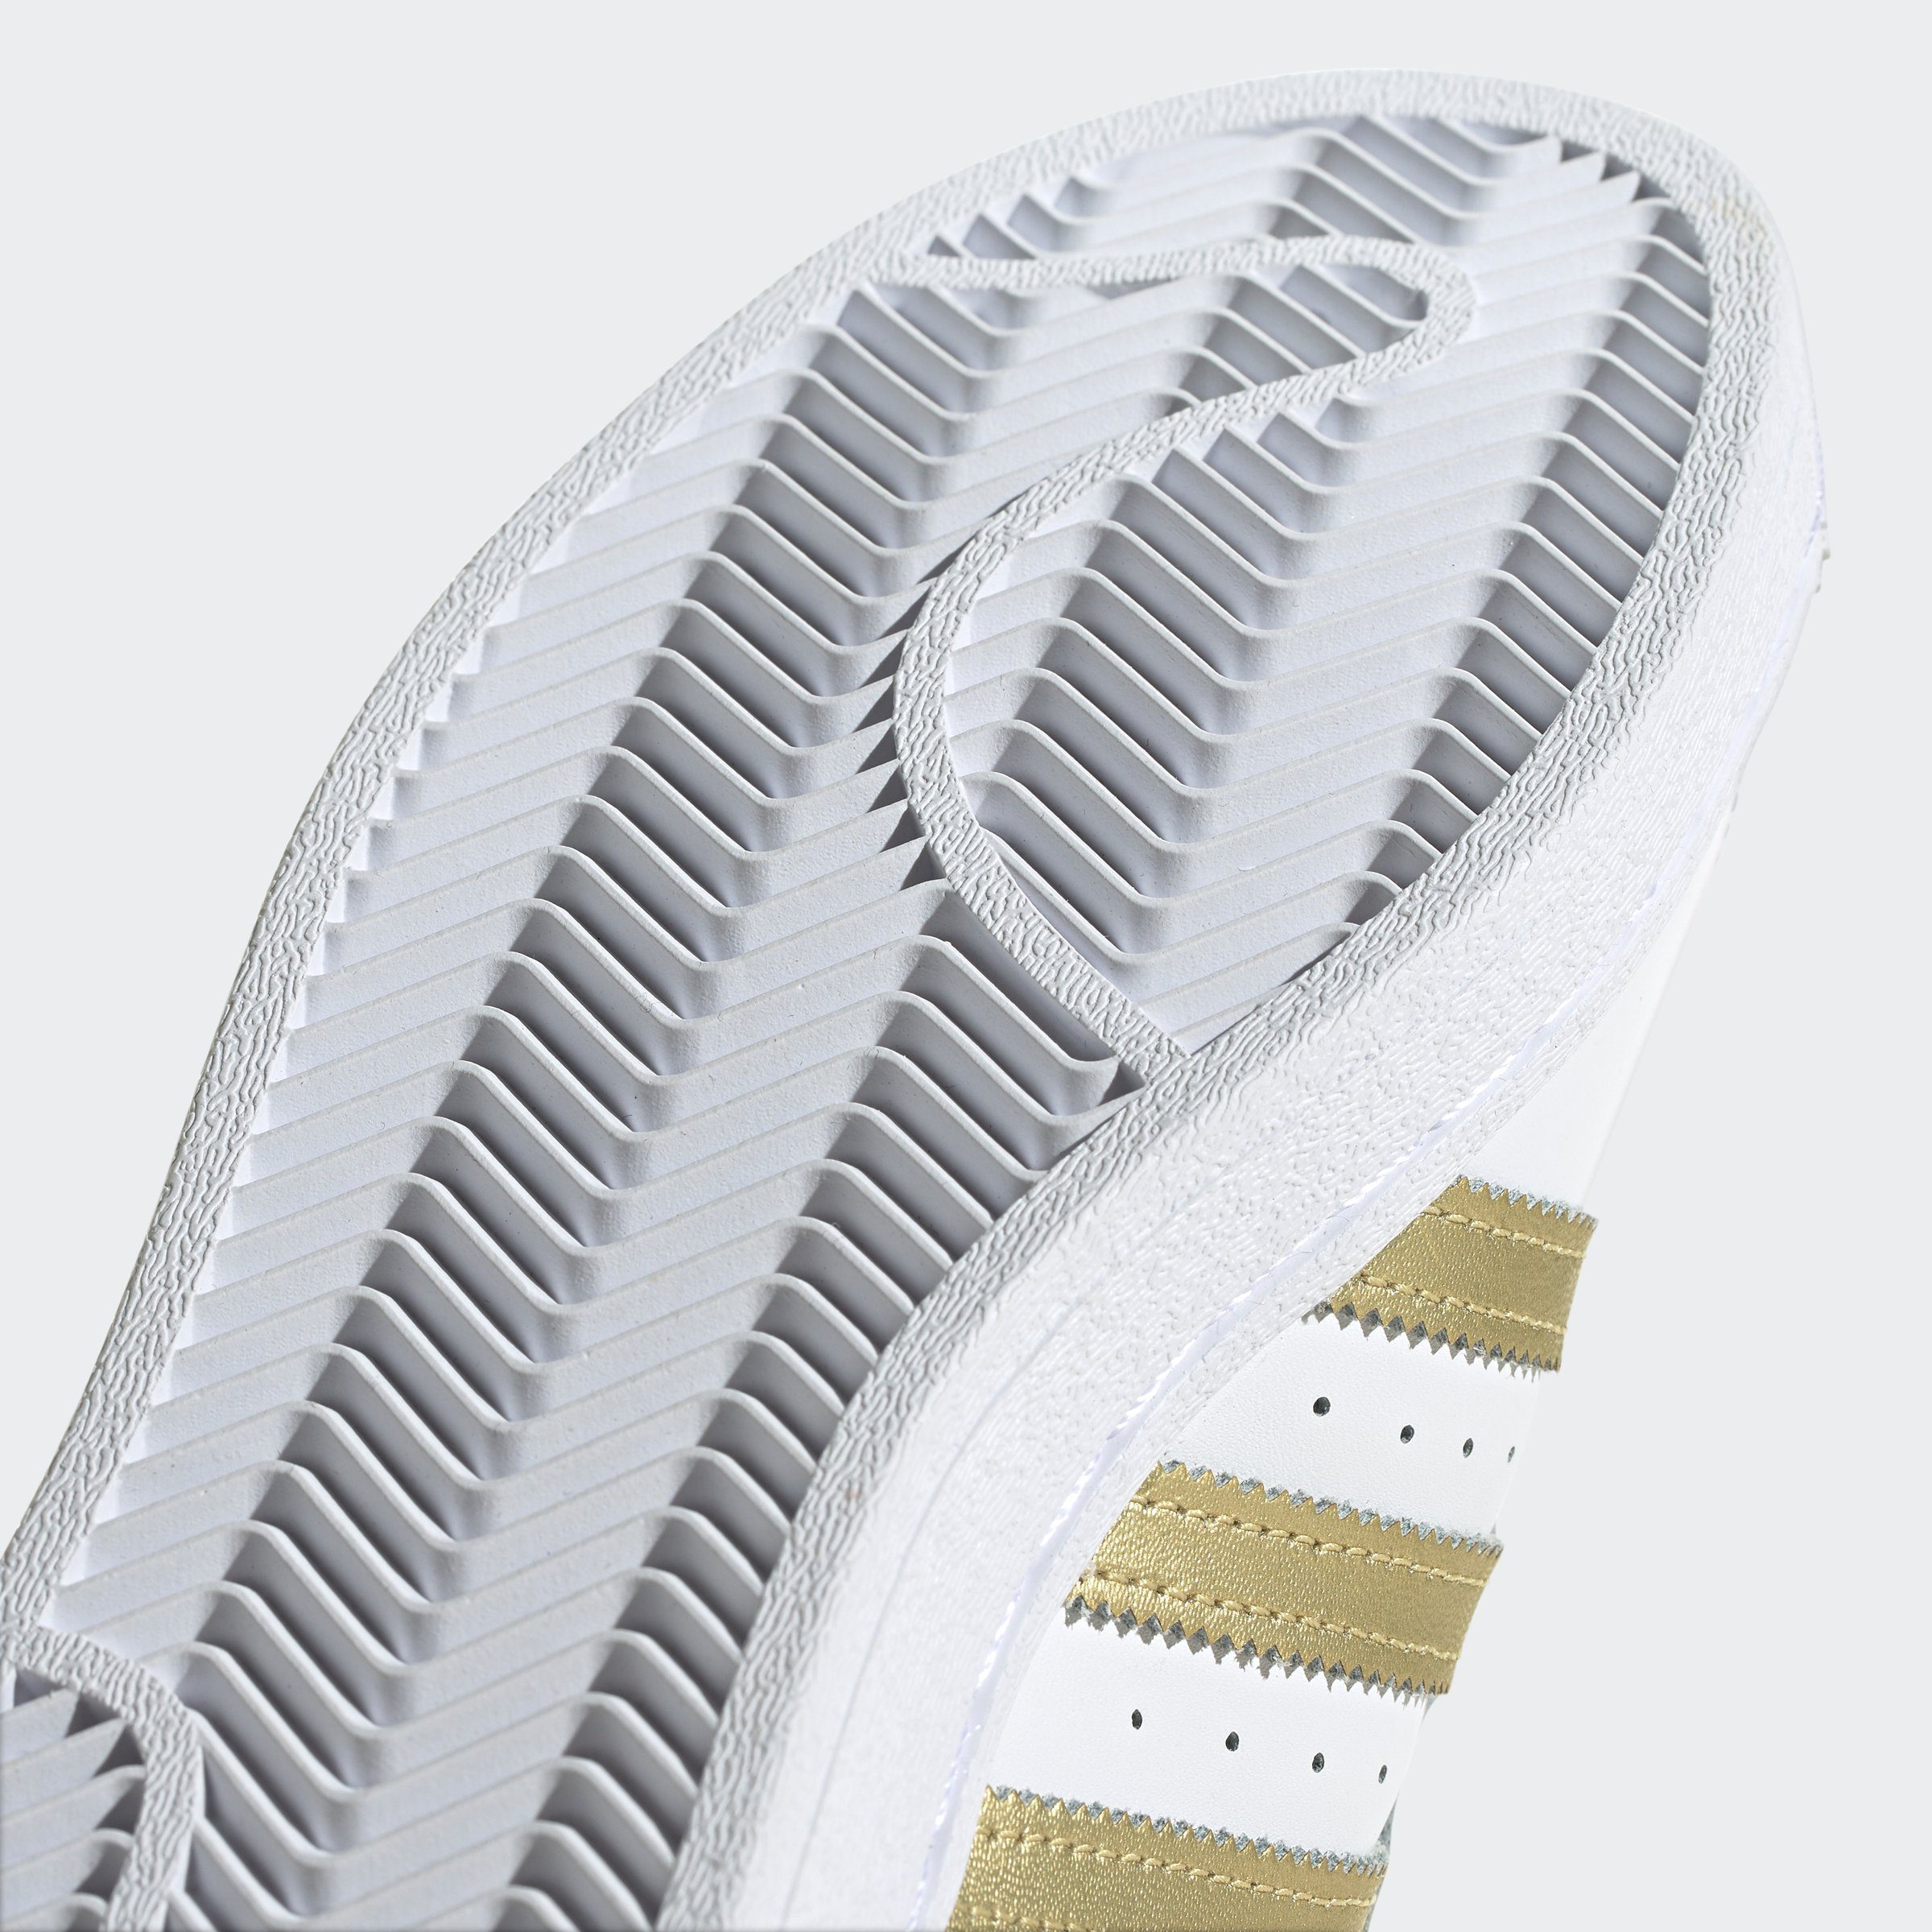 Sneaker adidas / White SUPERSTAR Metallic / Cloud White Cloud Gold Originals